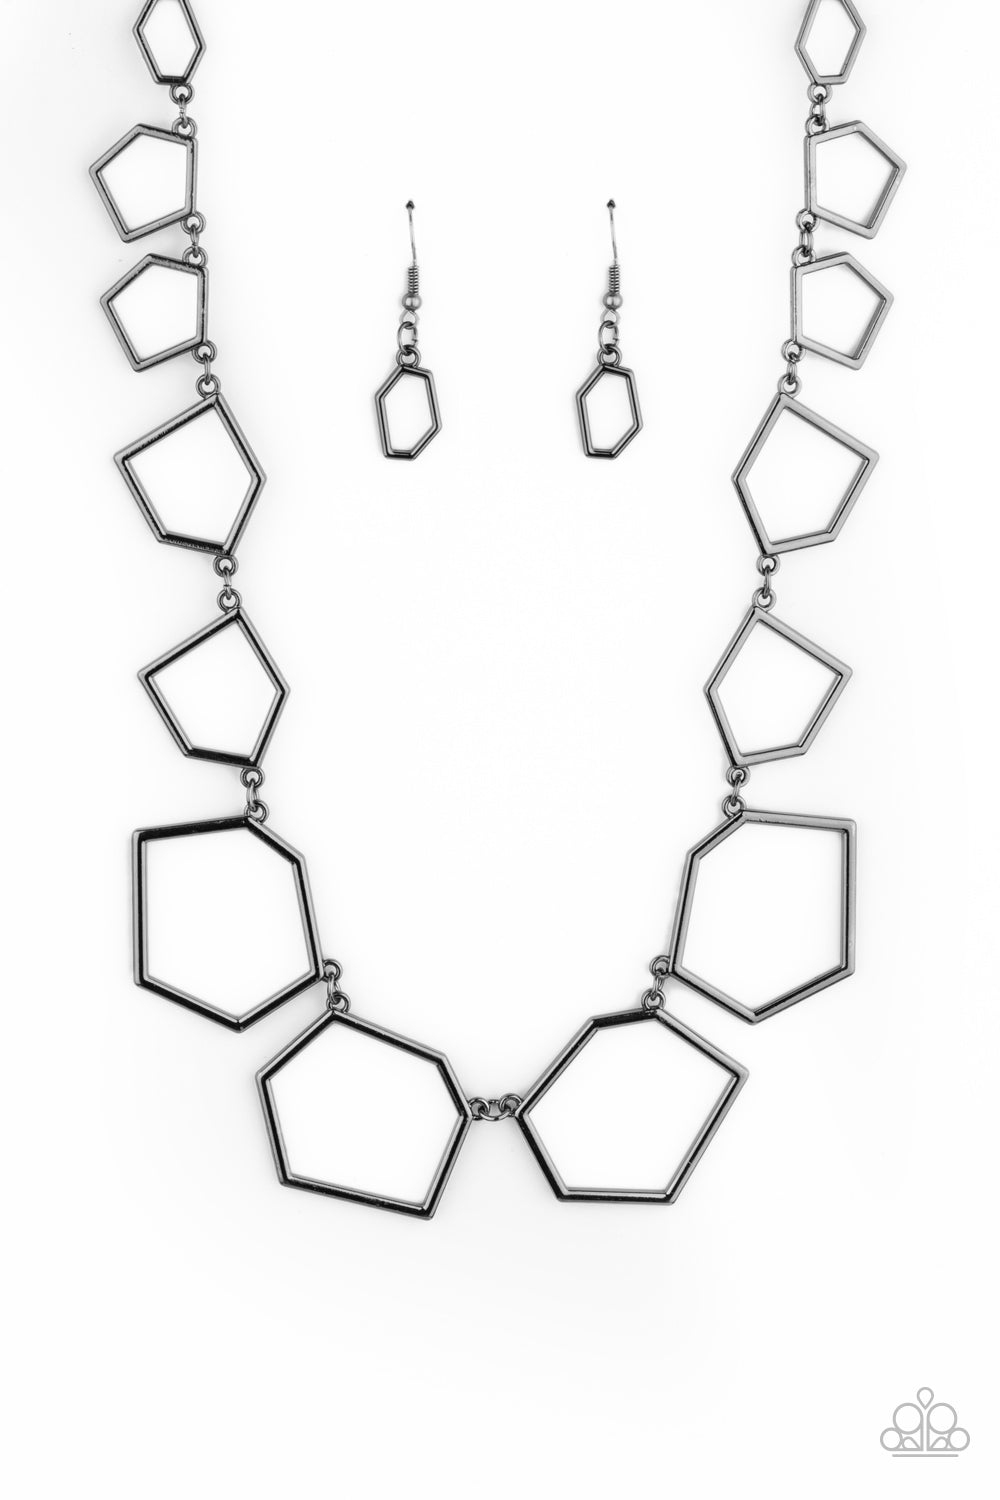 Full Frame Fashion Black
Necklace - Daria's Blings N Things